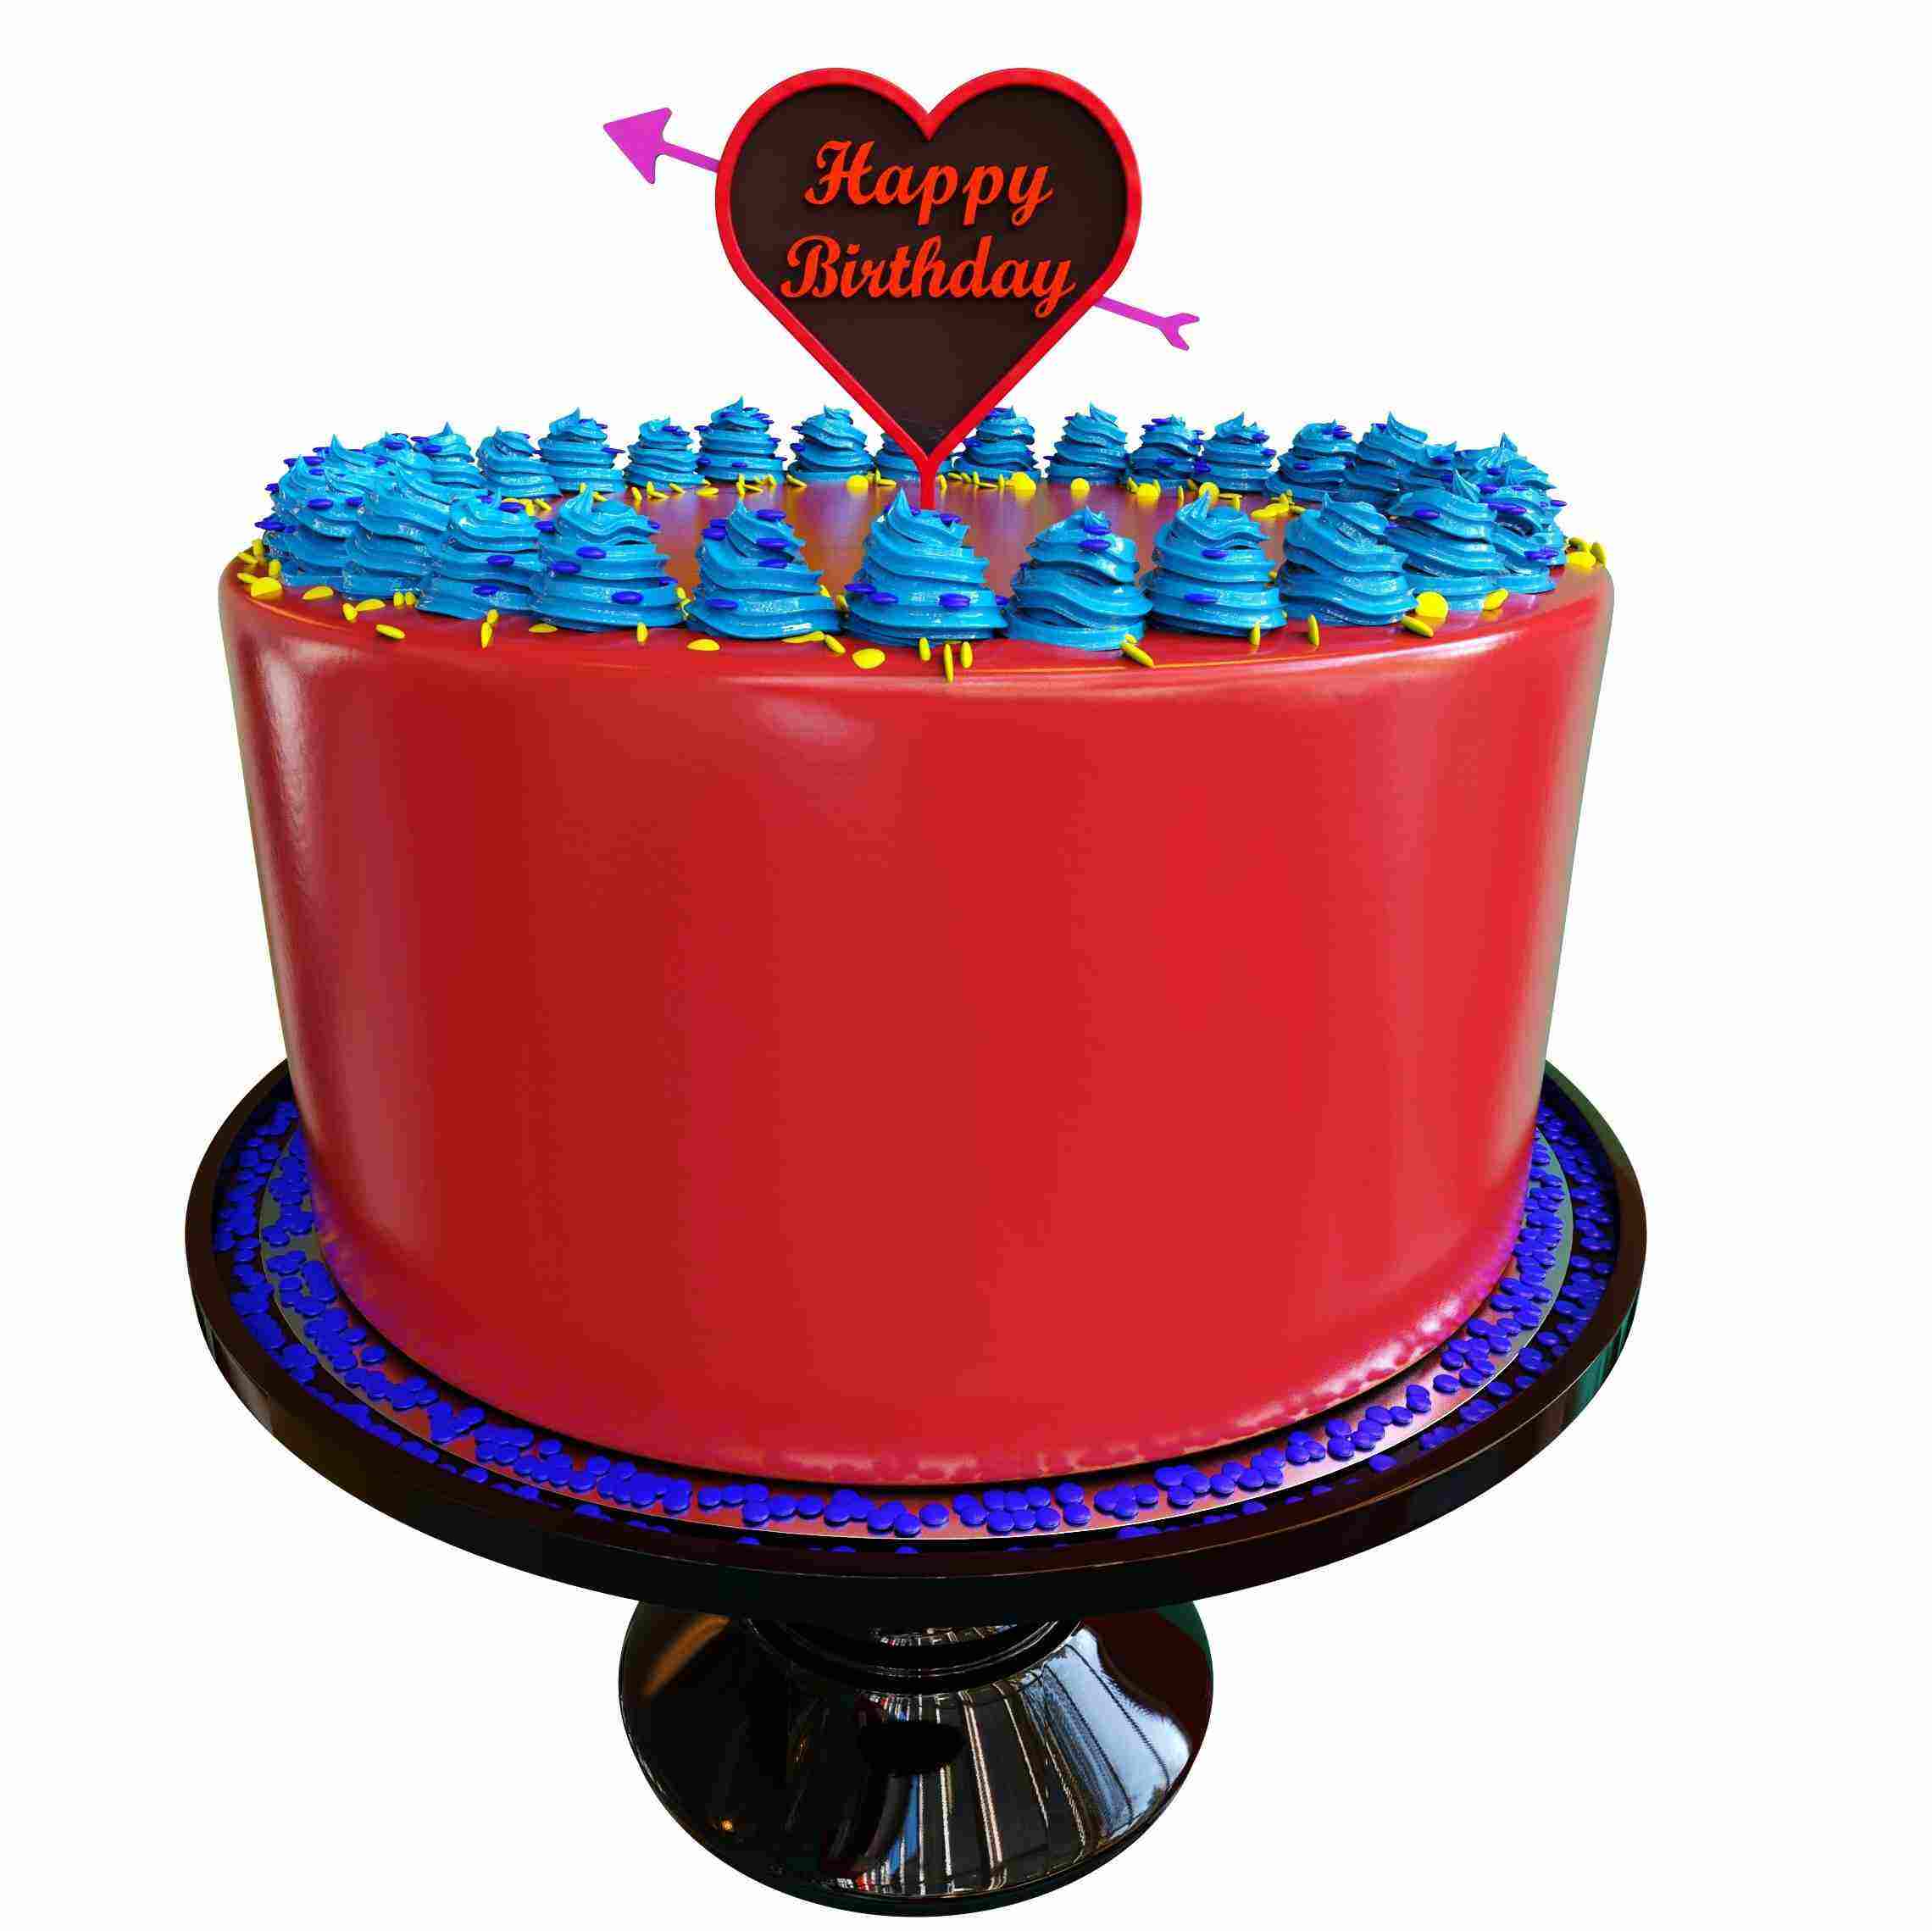 Johnny bravo cartoon network cake topper happy birthday